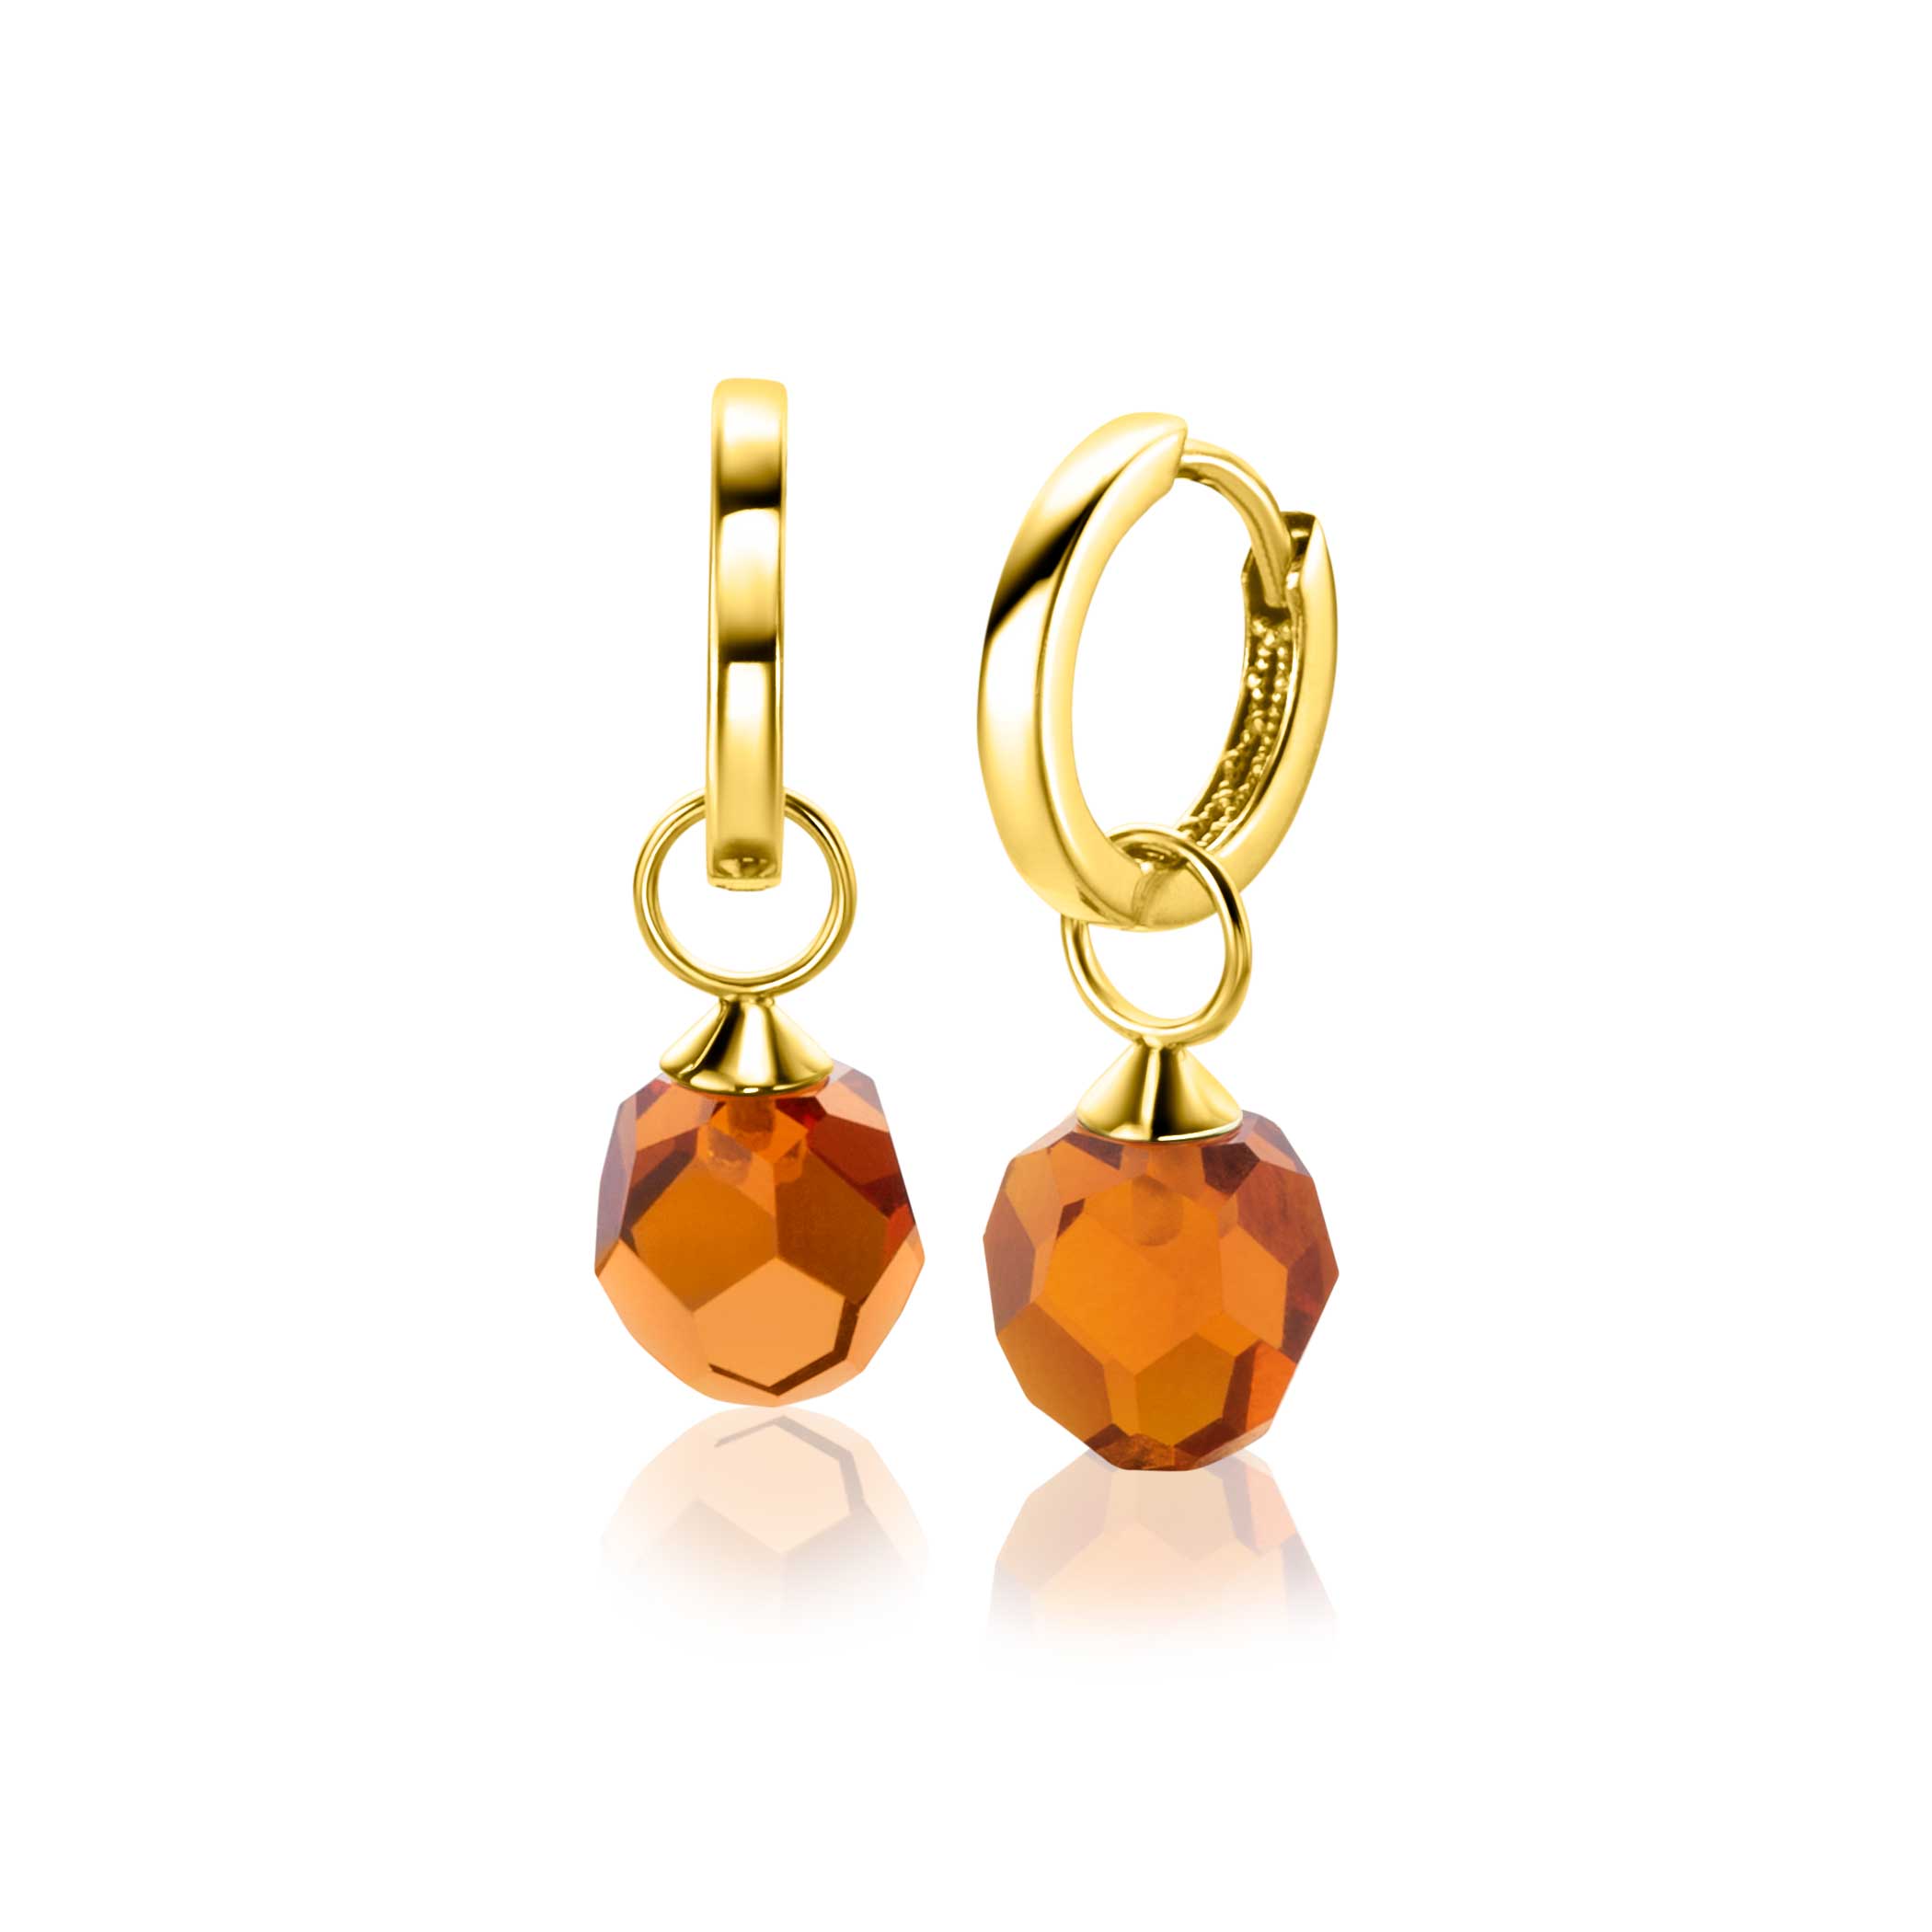 ZINZI 14K Gold Earrings Pendants Brown Beads 8mm ZGCH144BR (excl. hoop earrings)